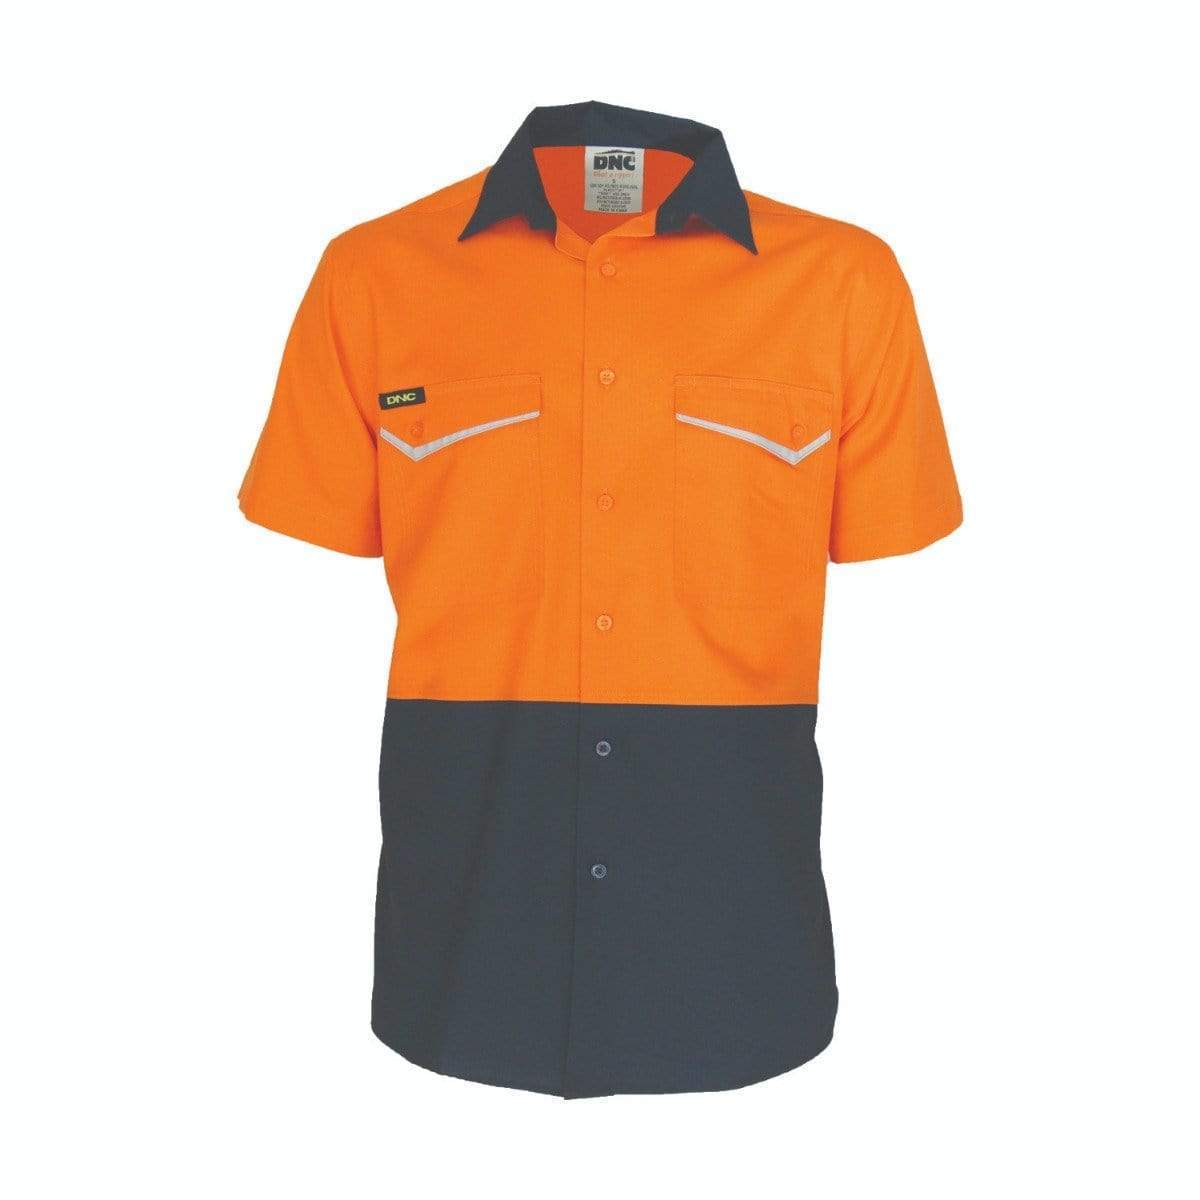 DNC Workwear Work Wear Orange/Navy / XS DNC WORKWEAR Two-Tone Ripstop Cotton Cool Short Sleeve Shirt 3585